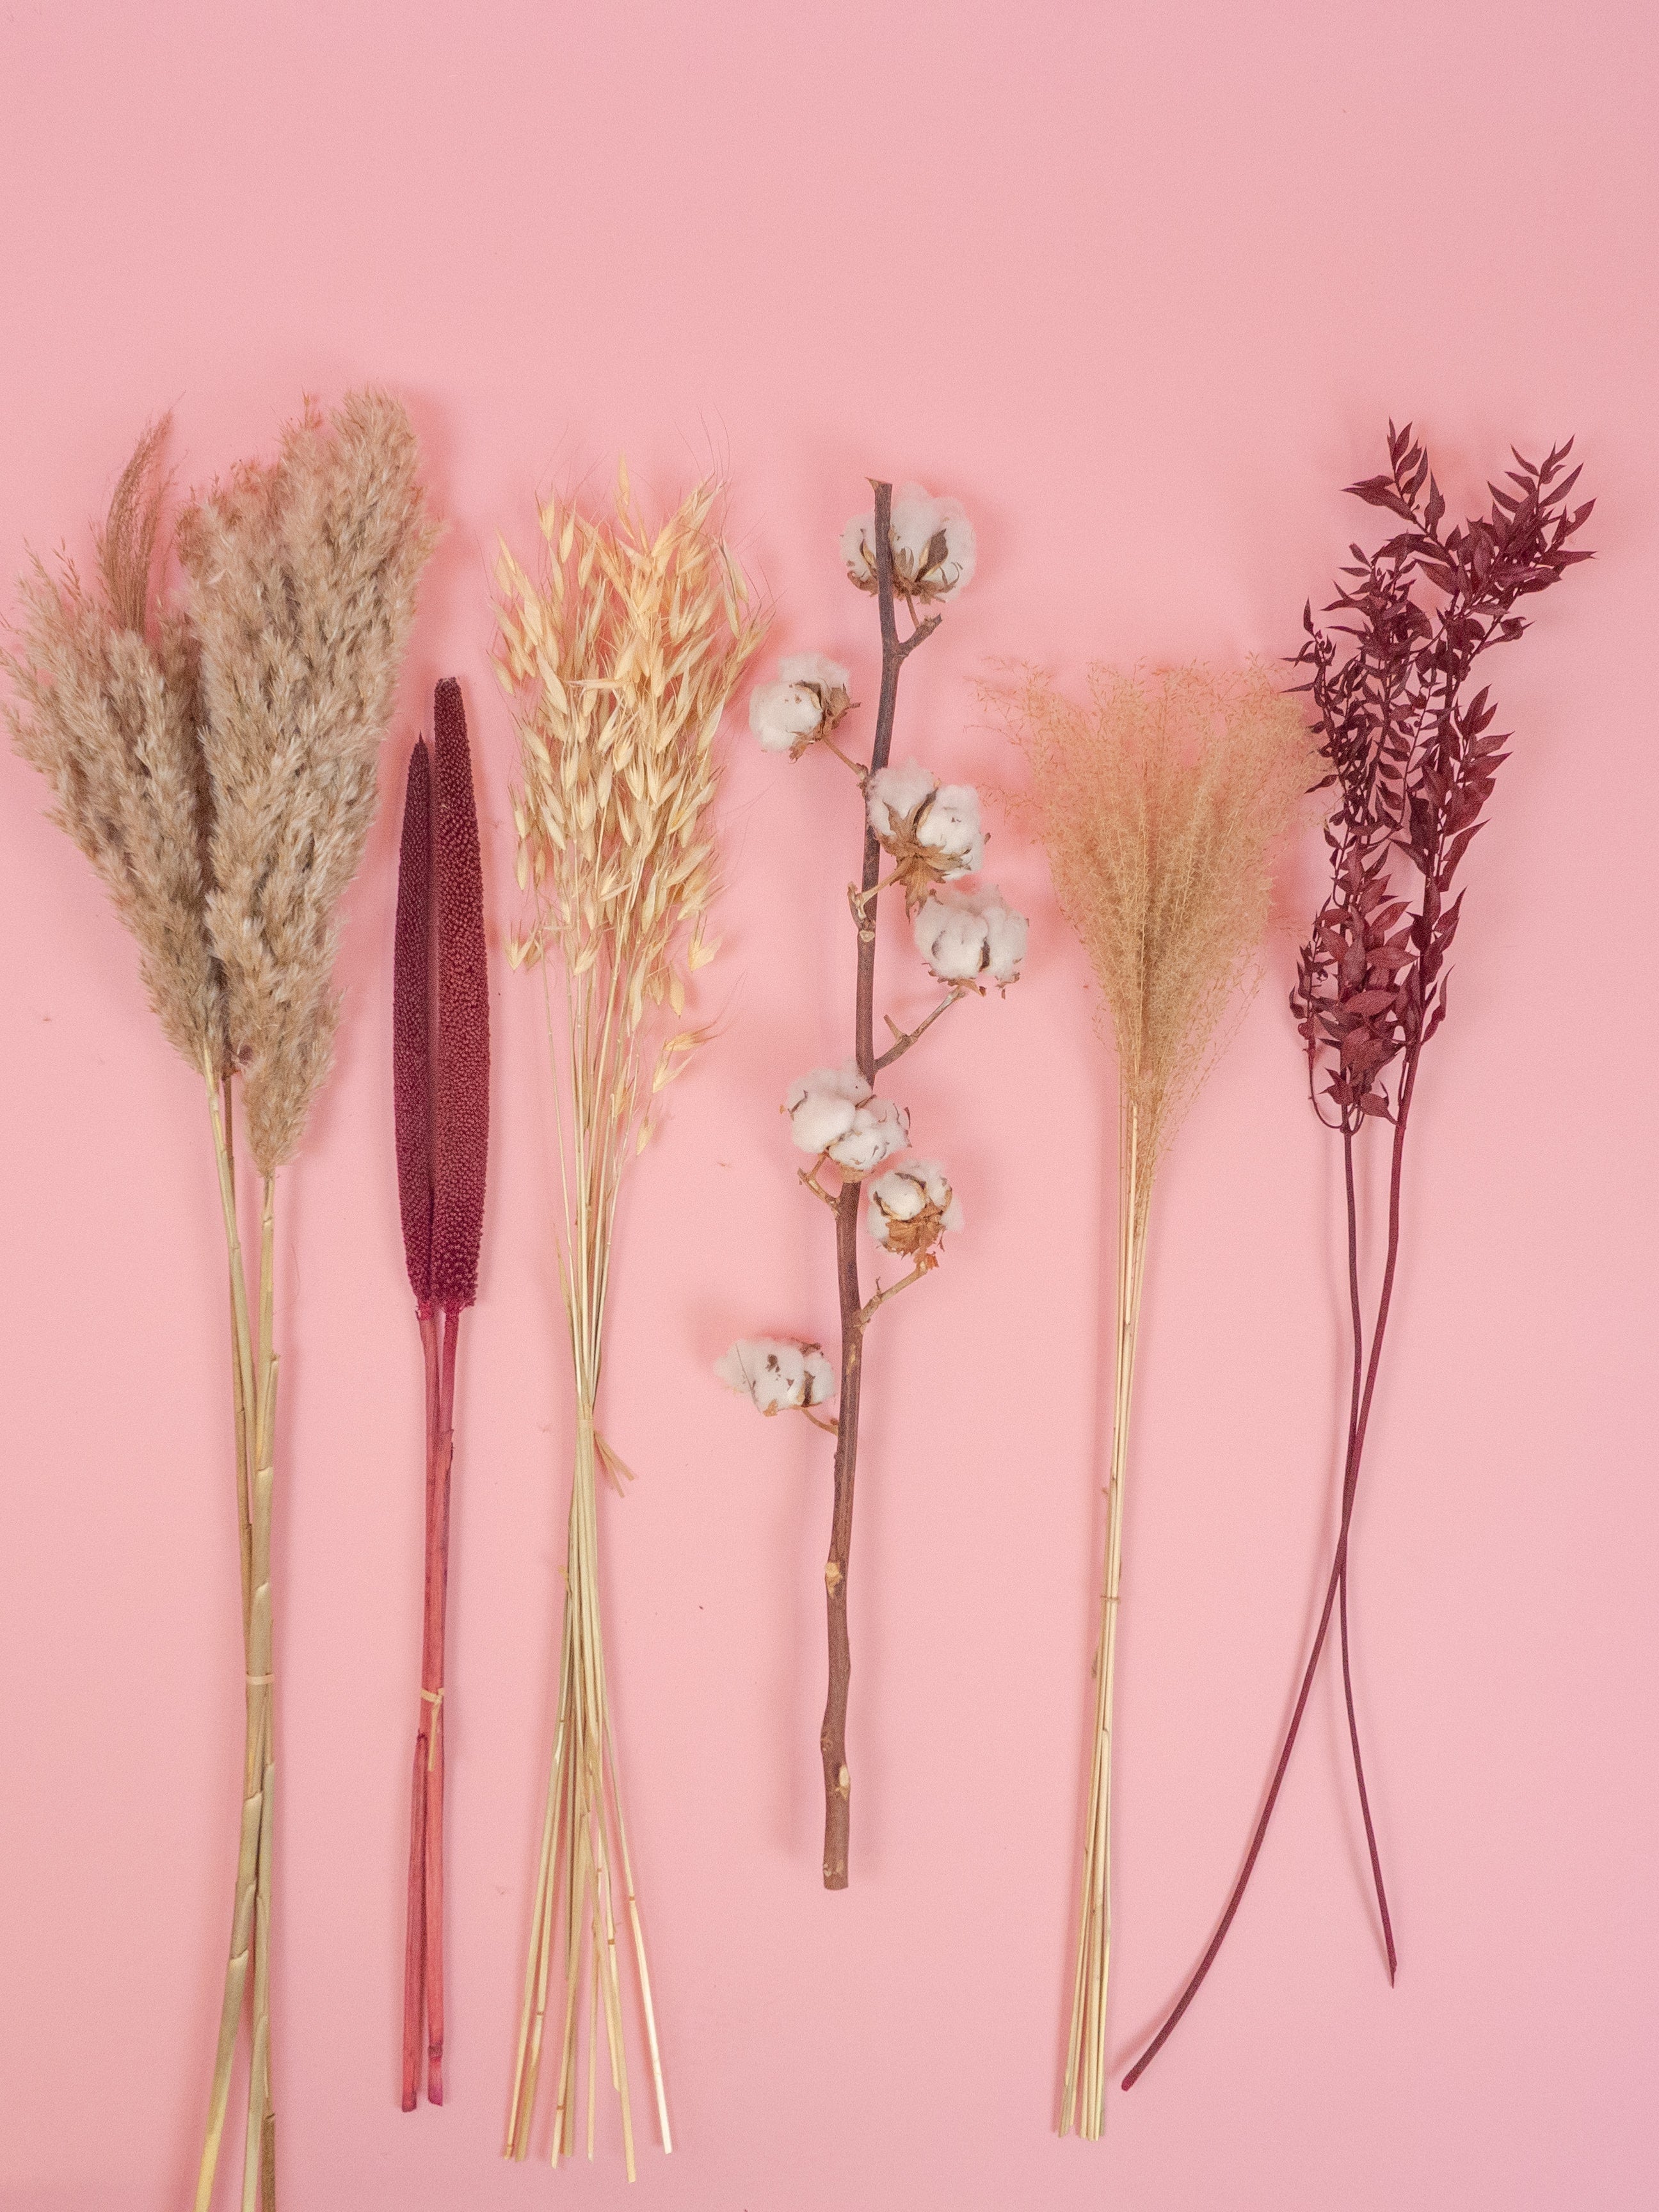 trockenblumen-strauss-cotton-candy-boho-baumwolle-ruskus-pampas-rot-beige-beflowerly